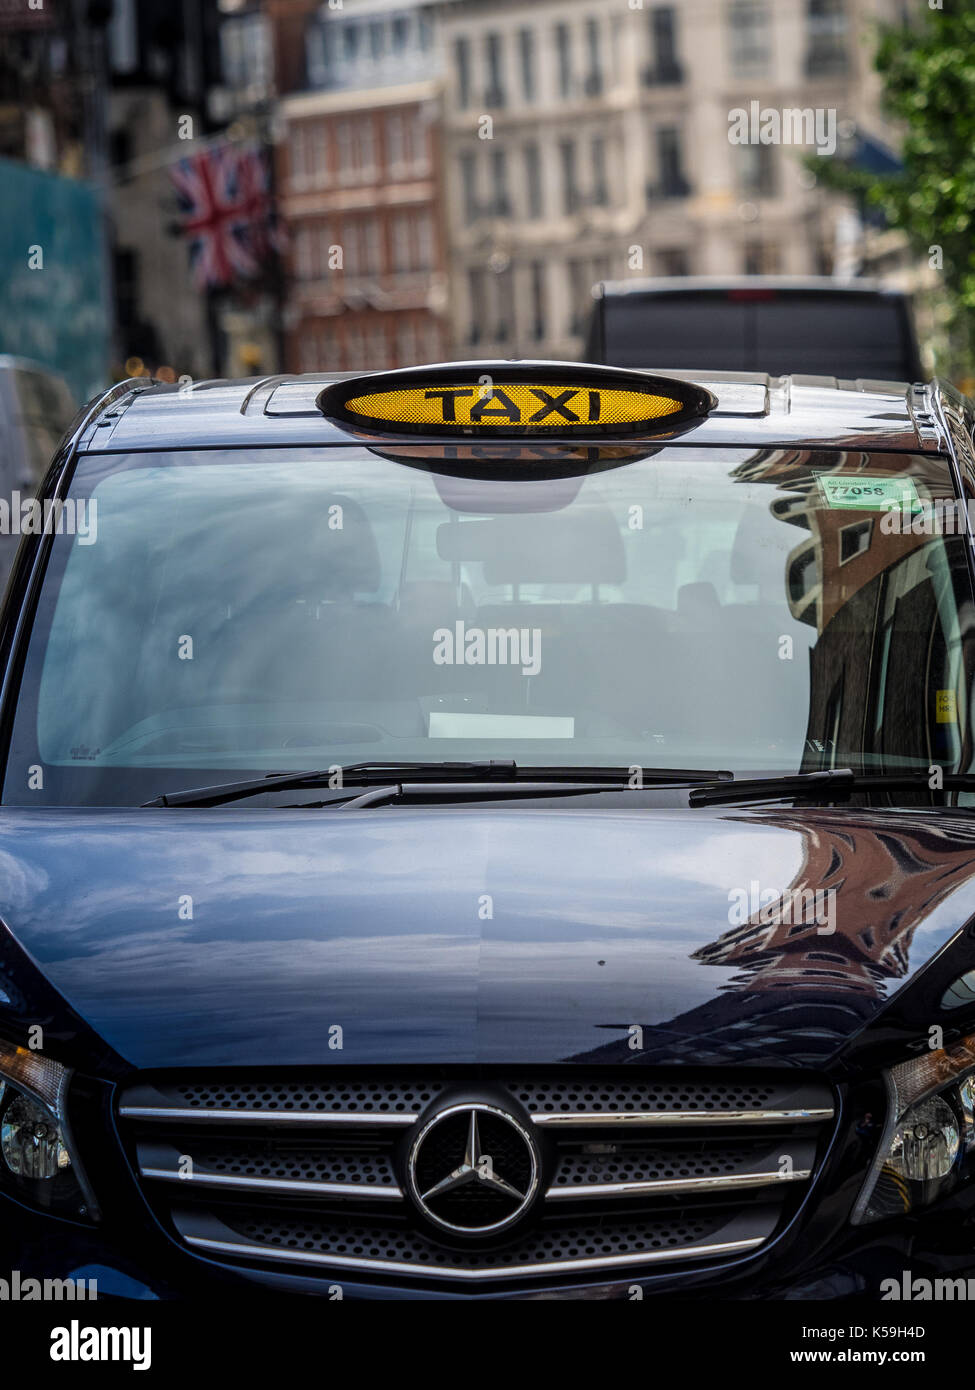 Mercedes Vito London Taxi Taxi Negro - Signos en un Mercedes Vito Taxi en el centro de Londres. El Vito es una alternativa al tradicional Black Cab Foto de stock